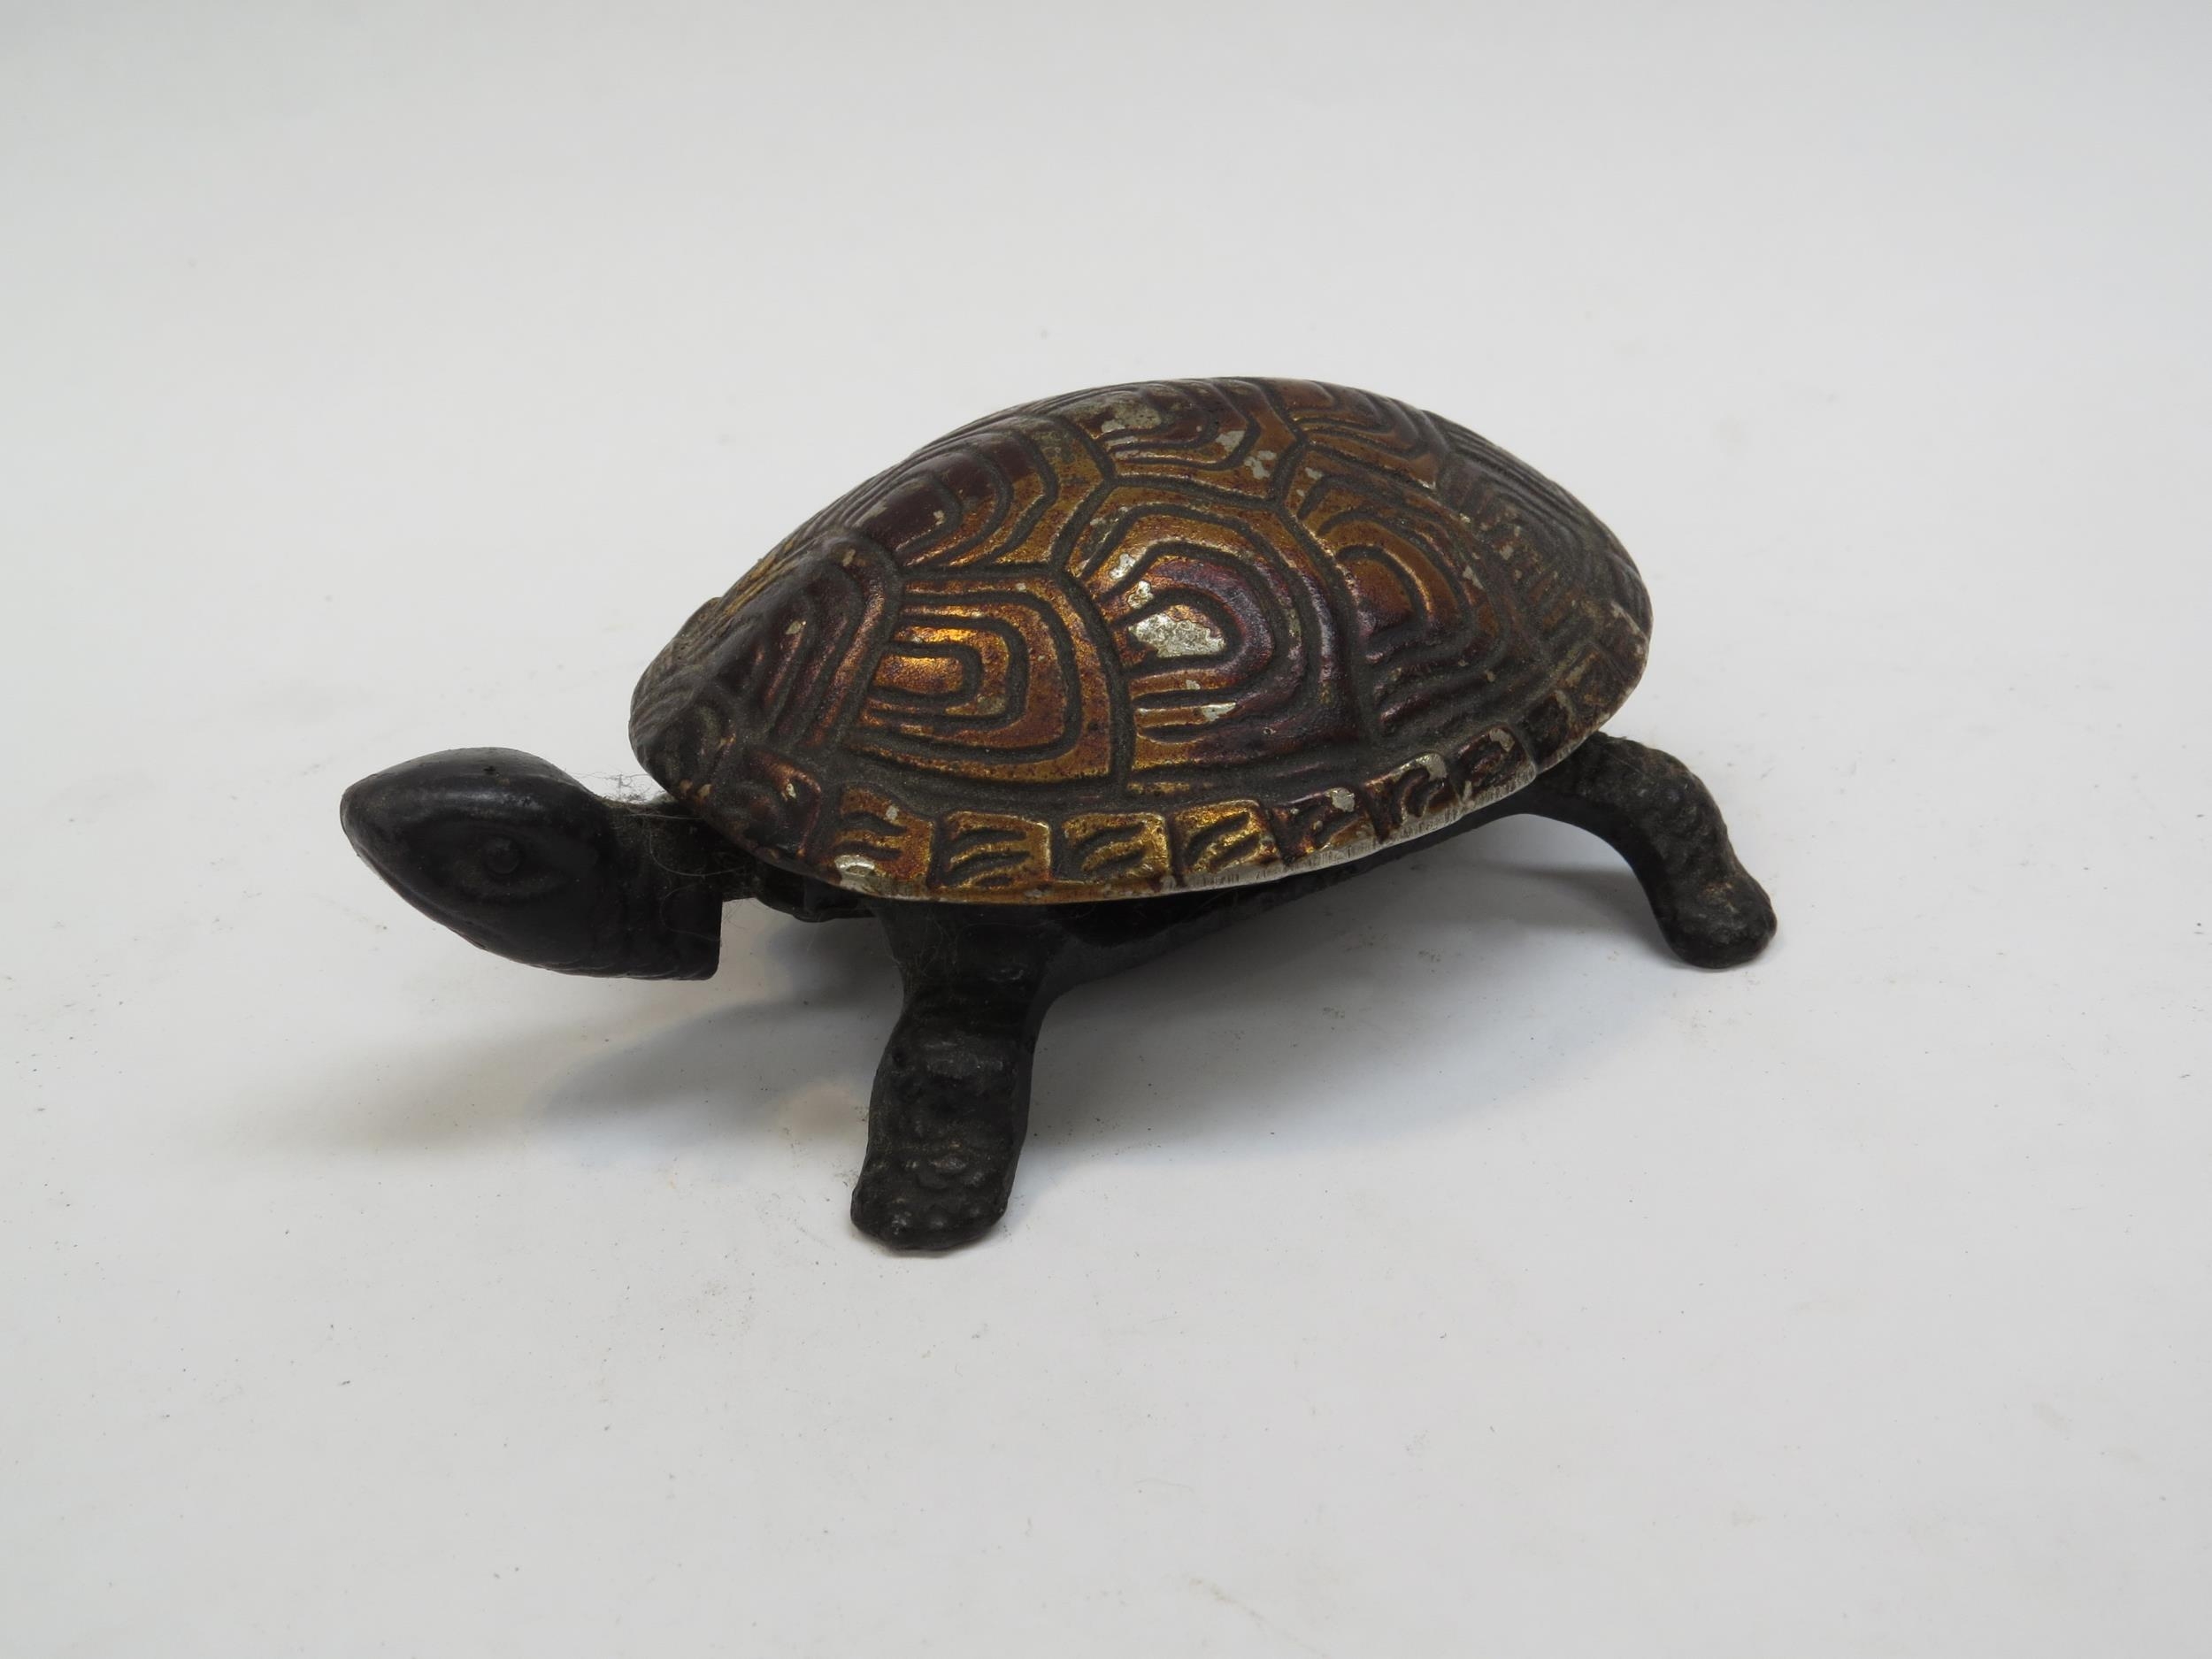 A cast metal tortoise shop counter bell, 12cm long - Image 2 of 3